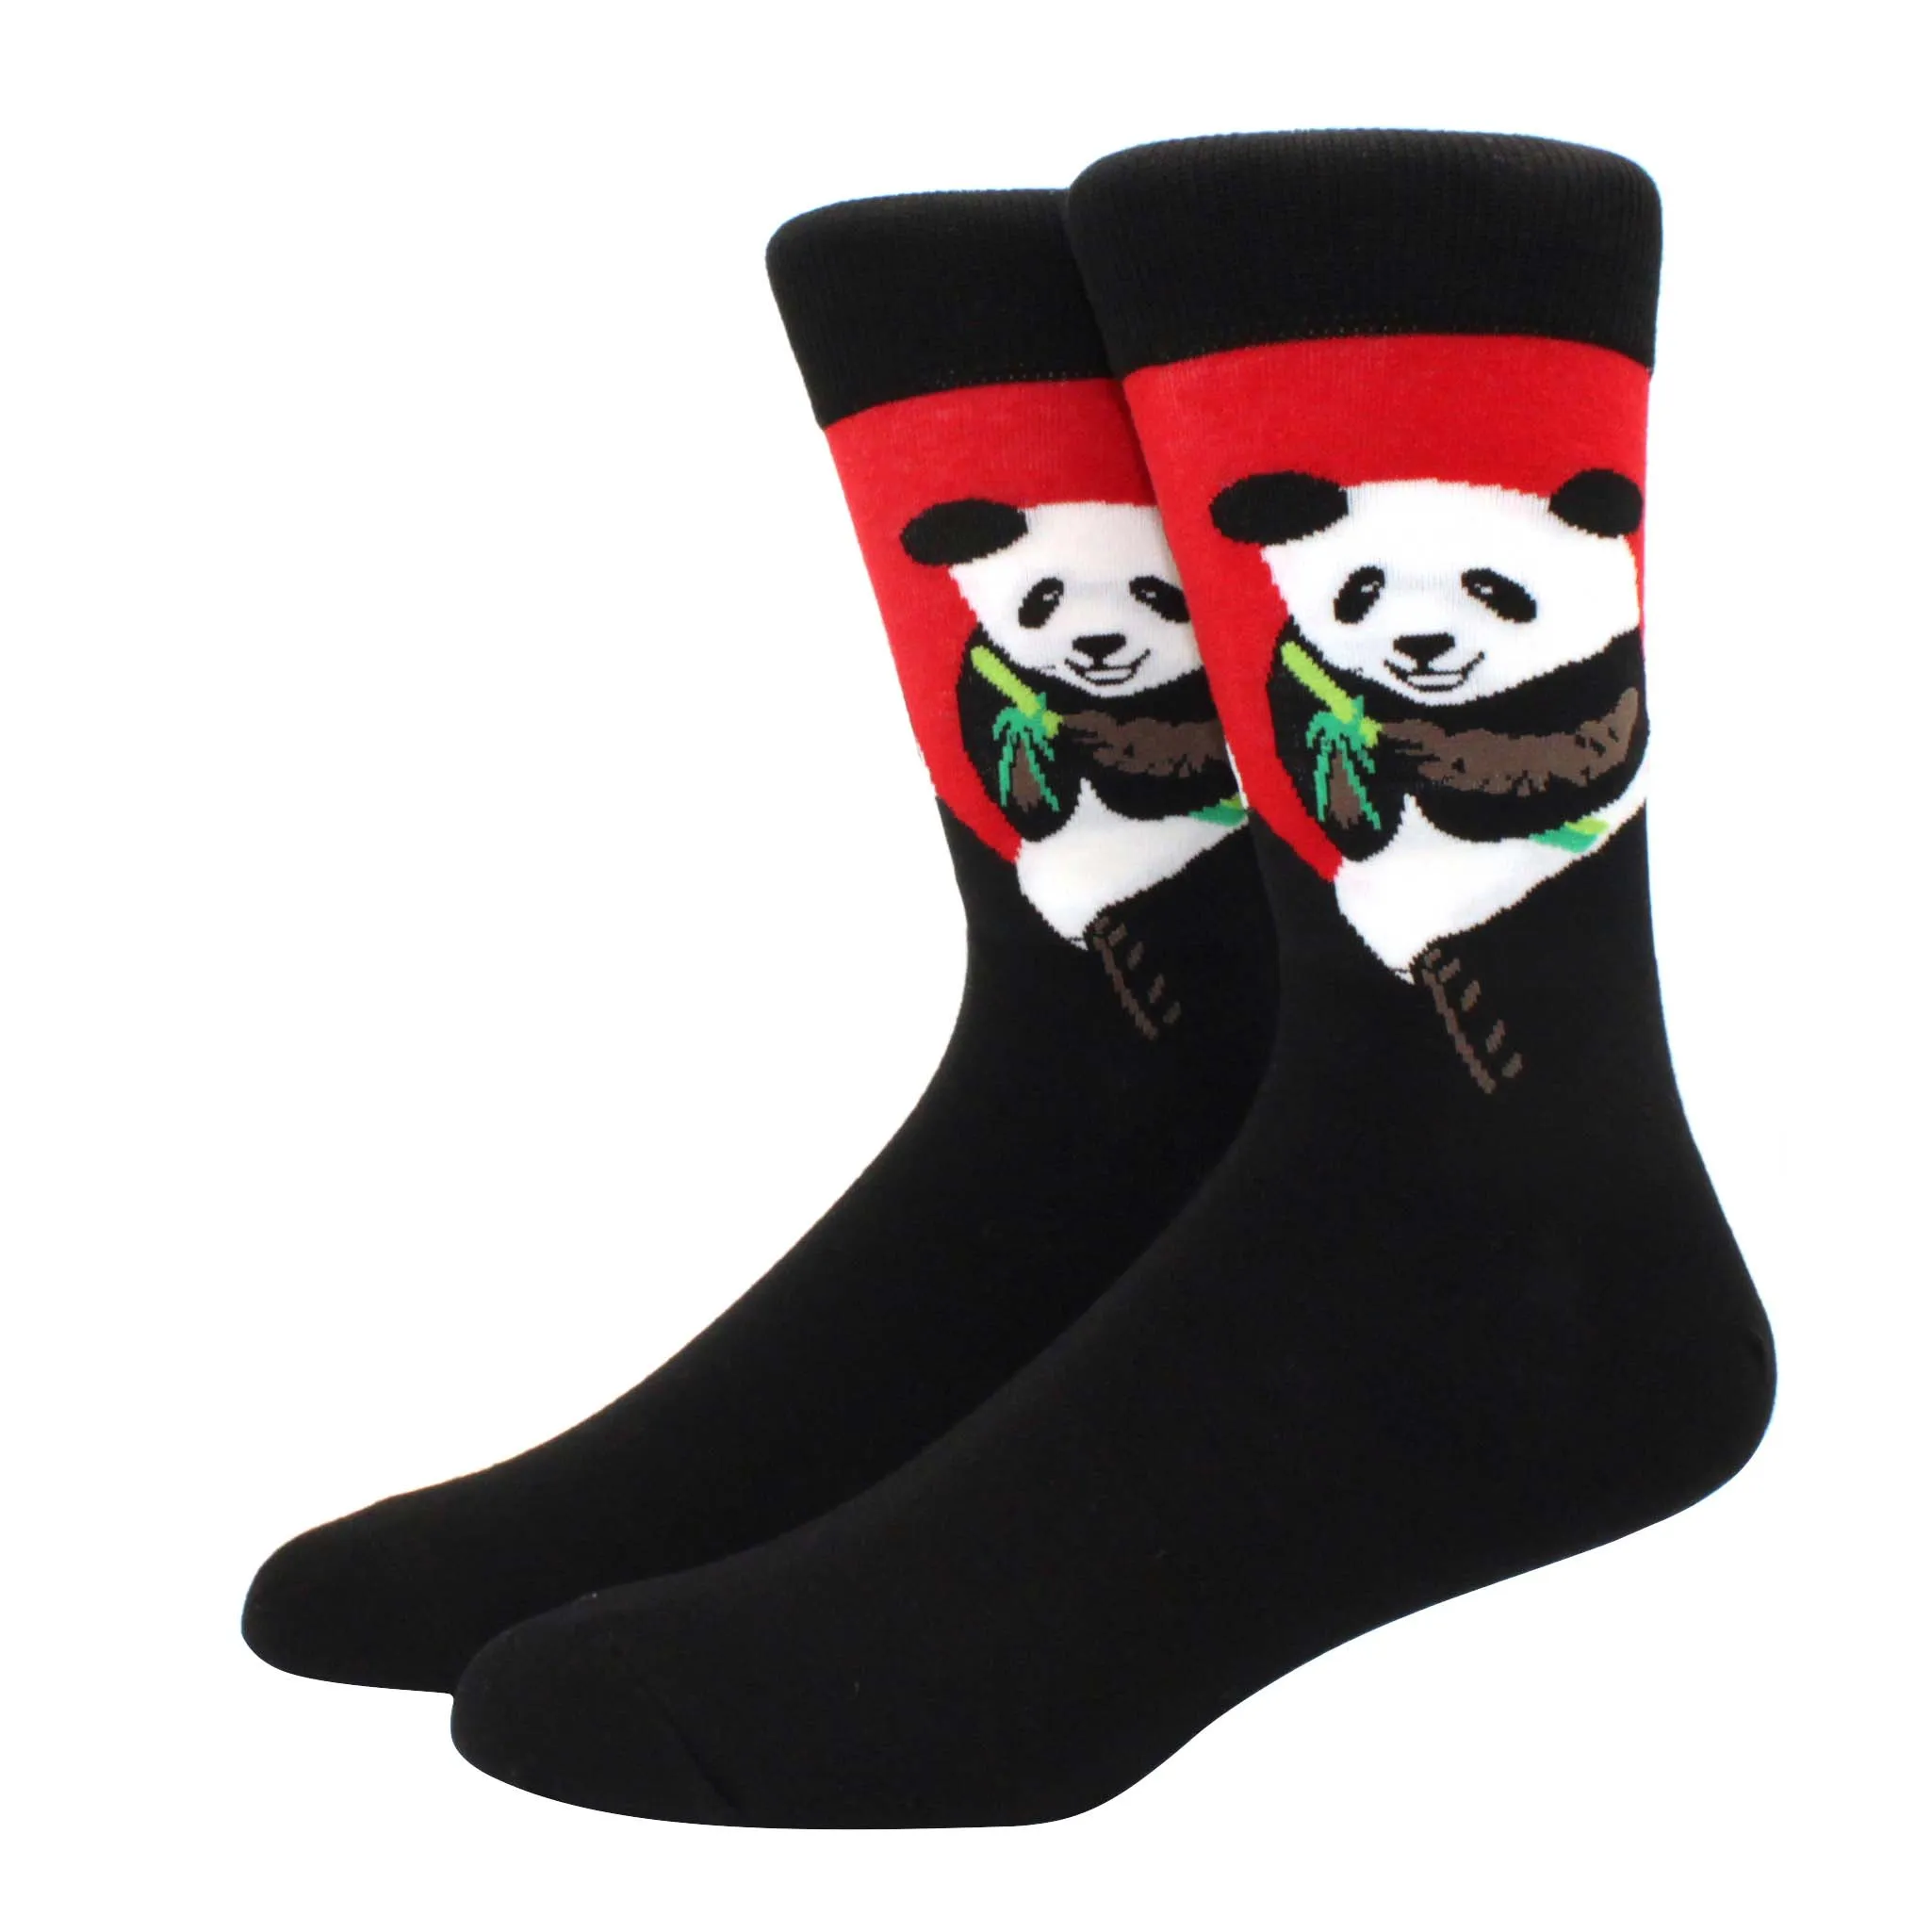 men happy fun socks printing art cute spring animal socks panda cow sheep bulldog cotton fashion harajuku colorful socks men 39s socks